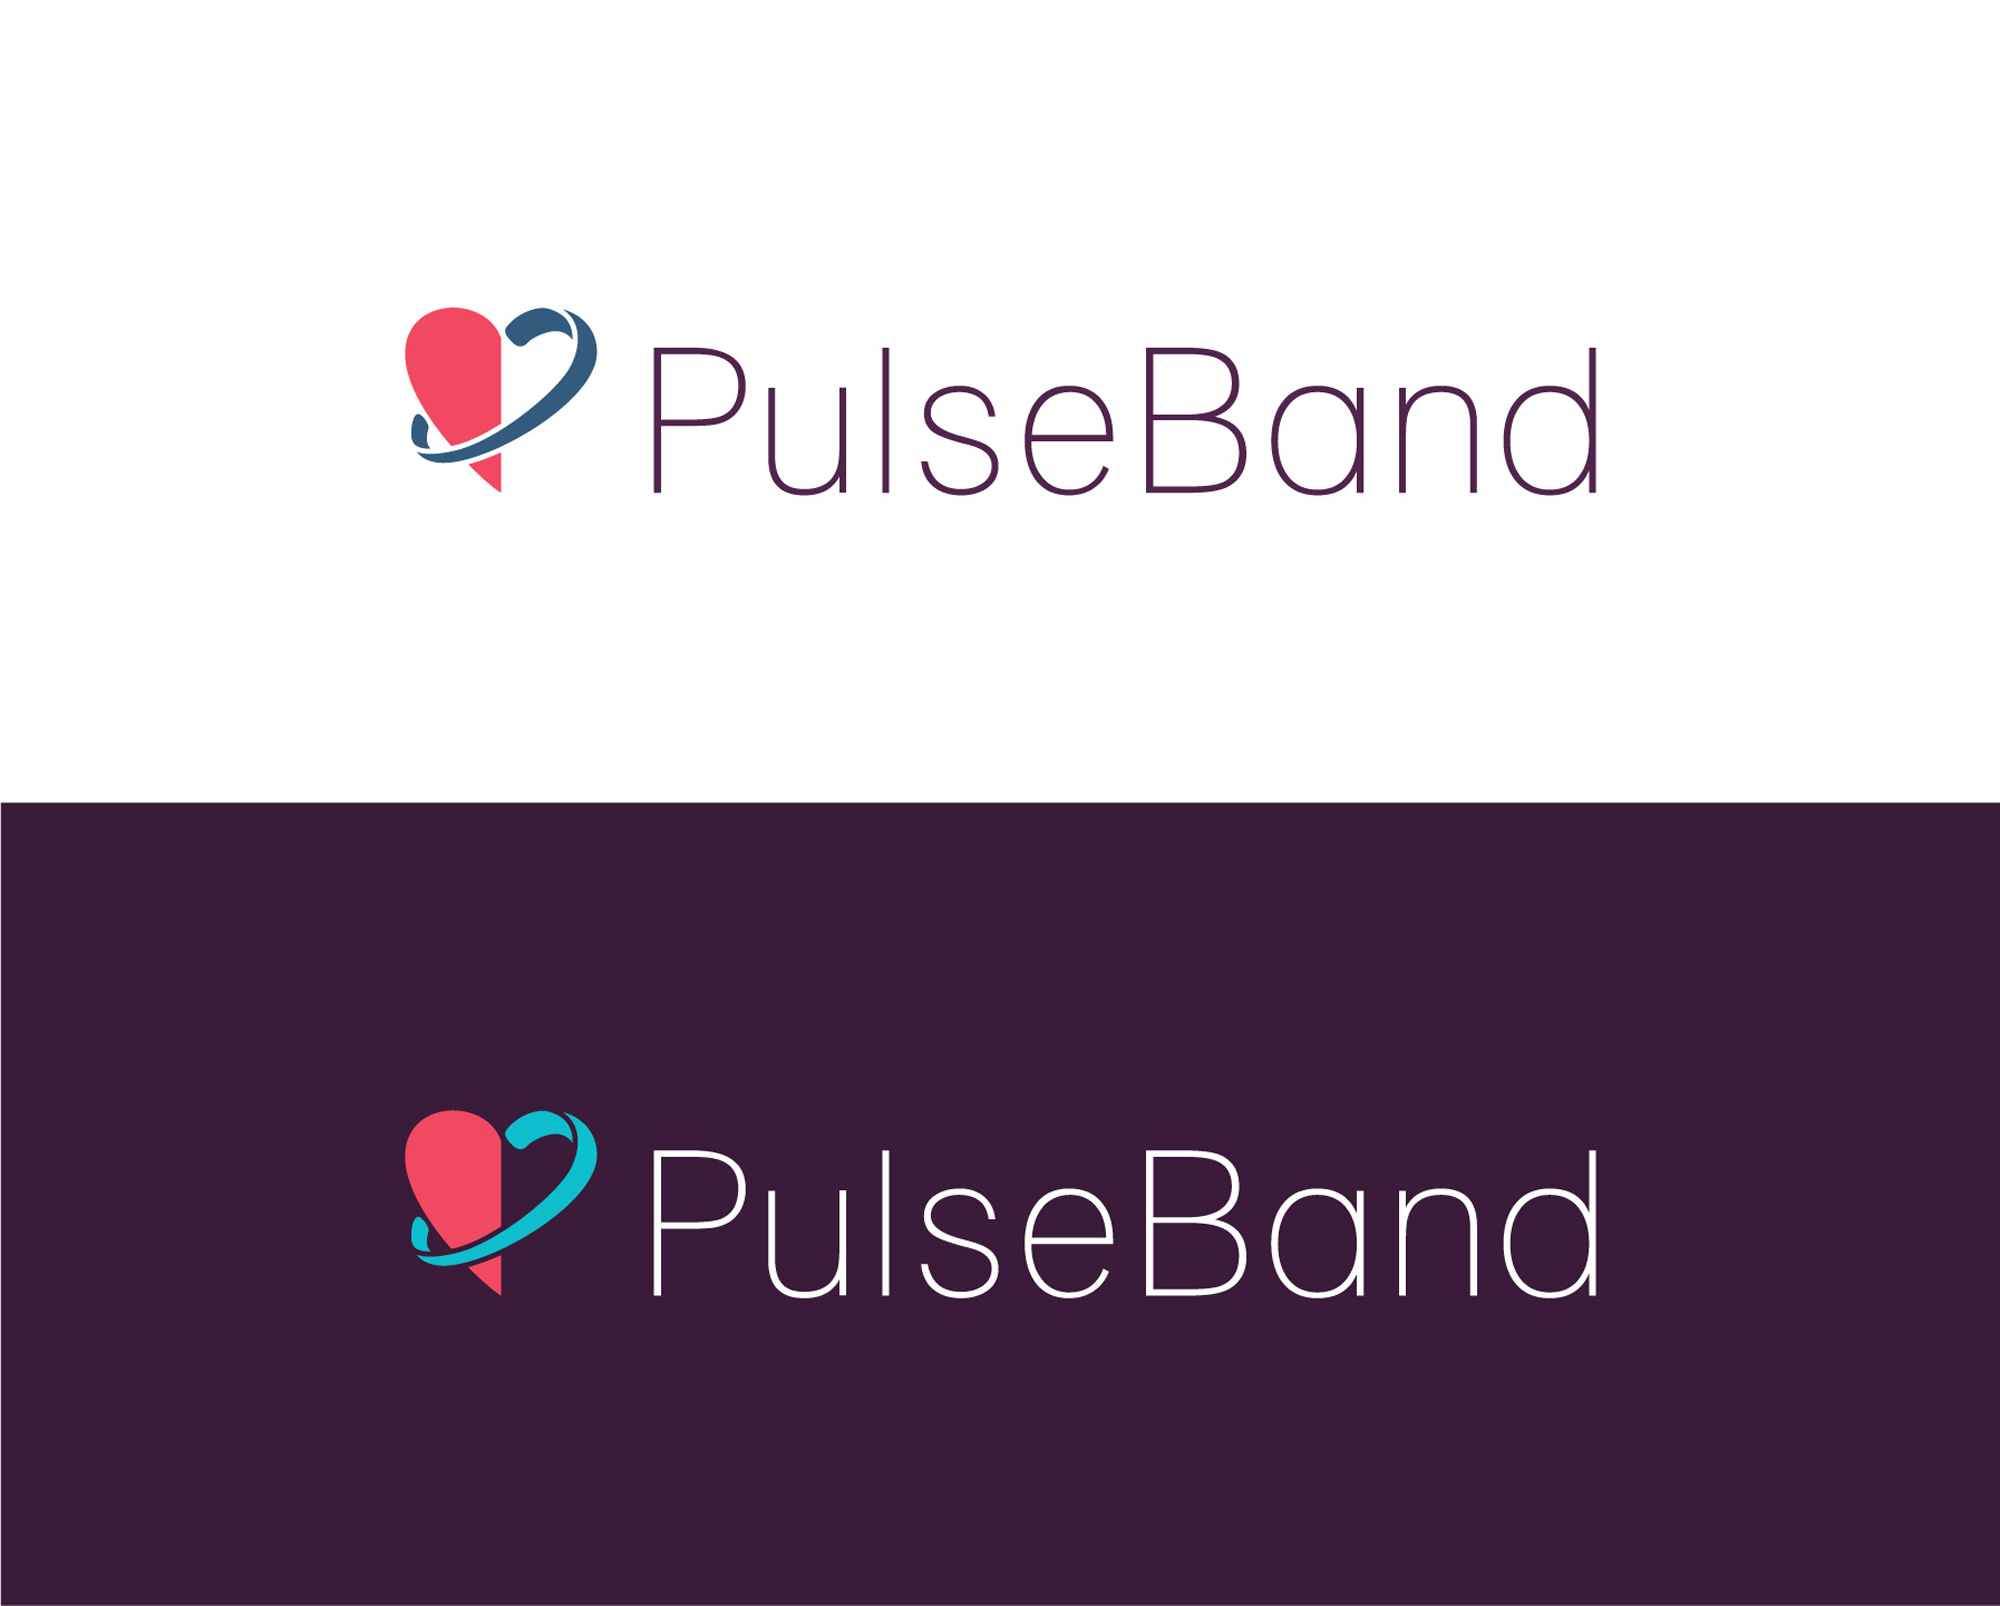 Pulseband